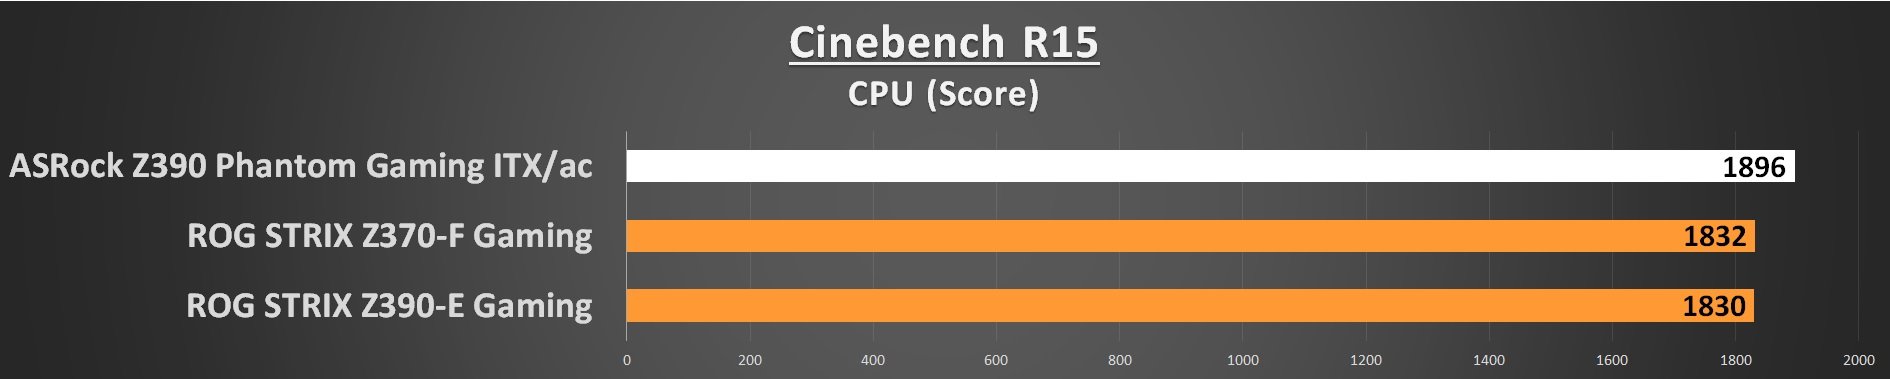 CInebench R15 CPU